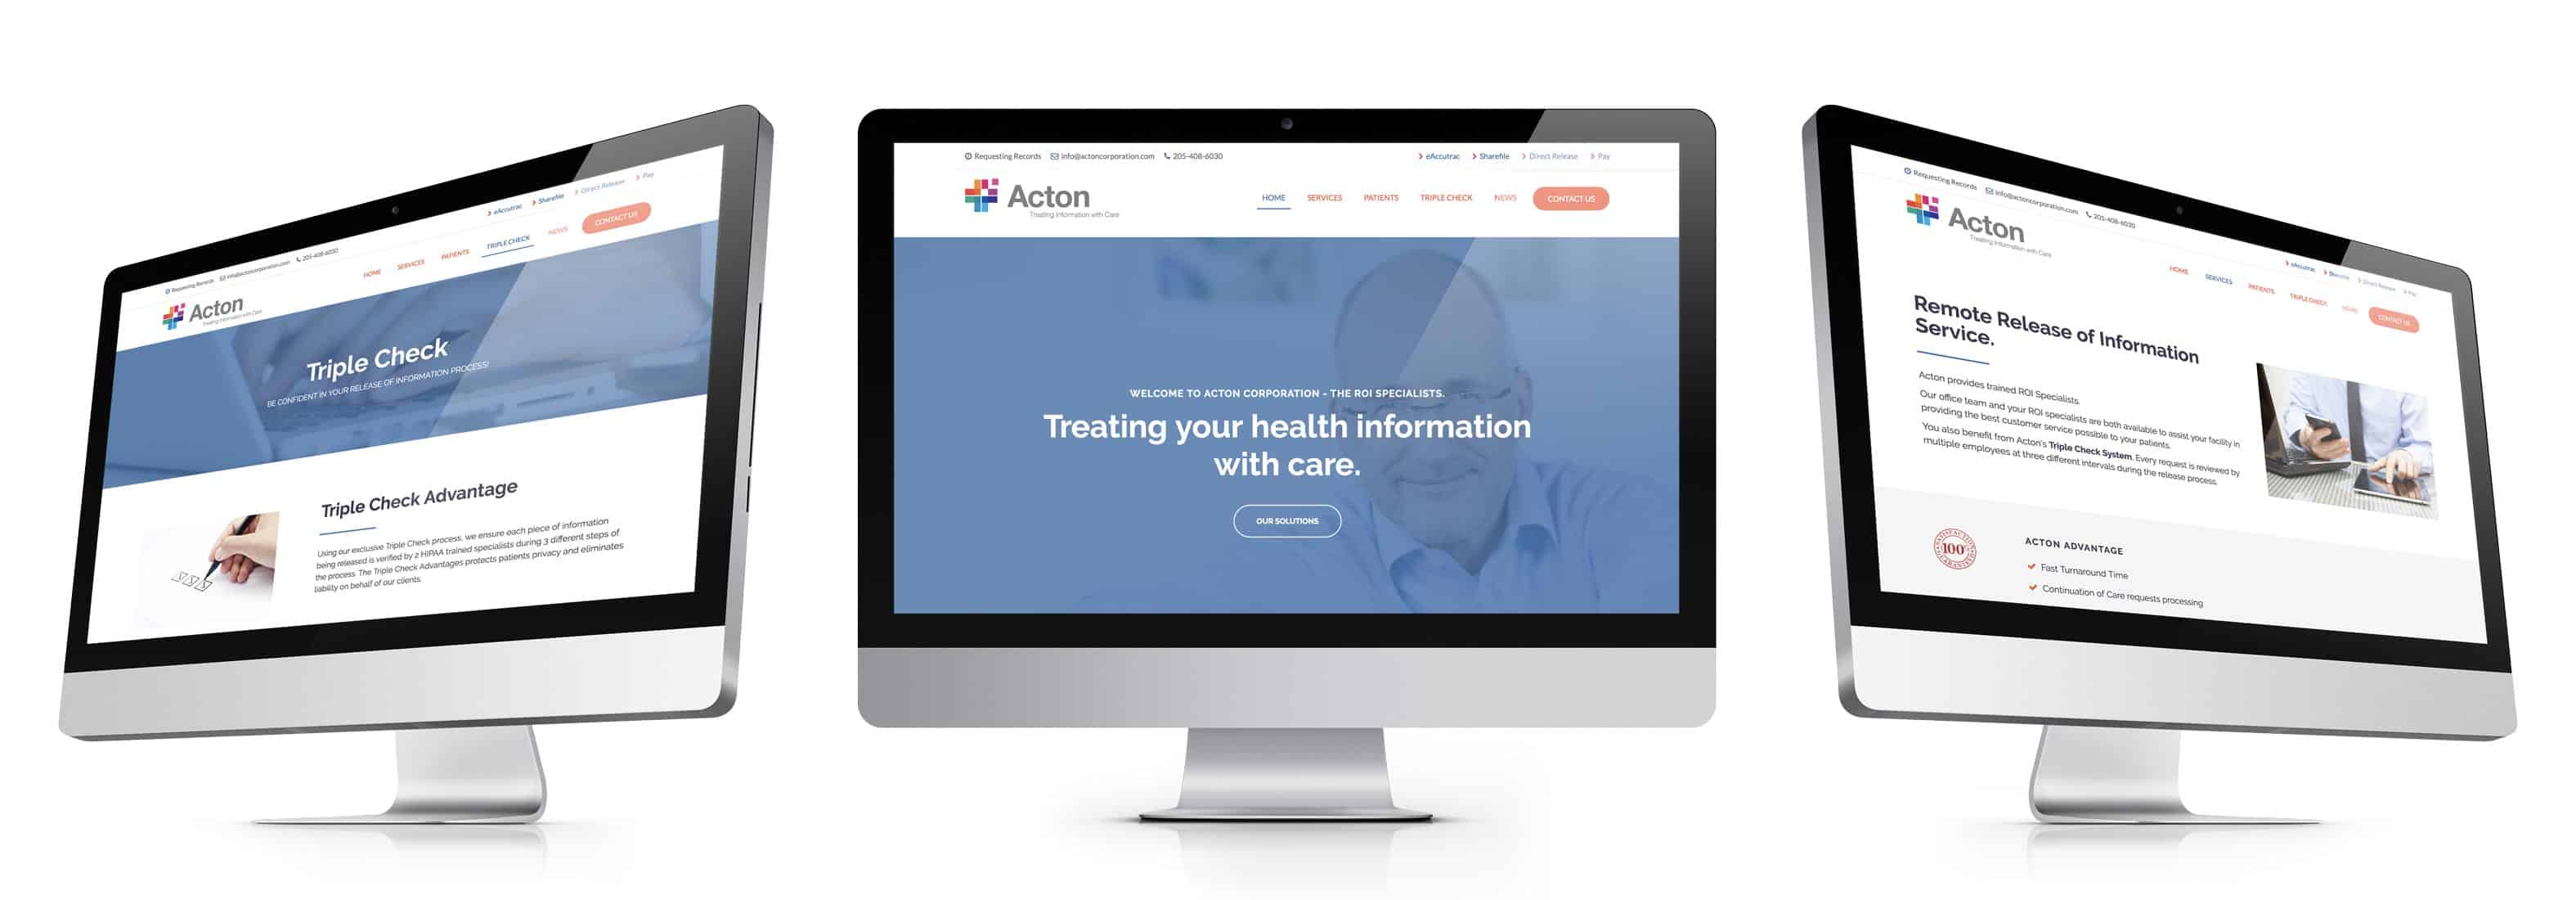 Acton Corporation Website